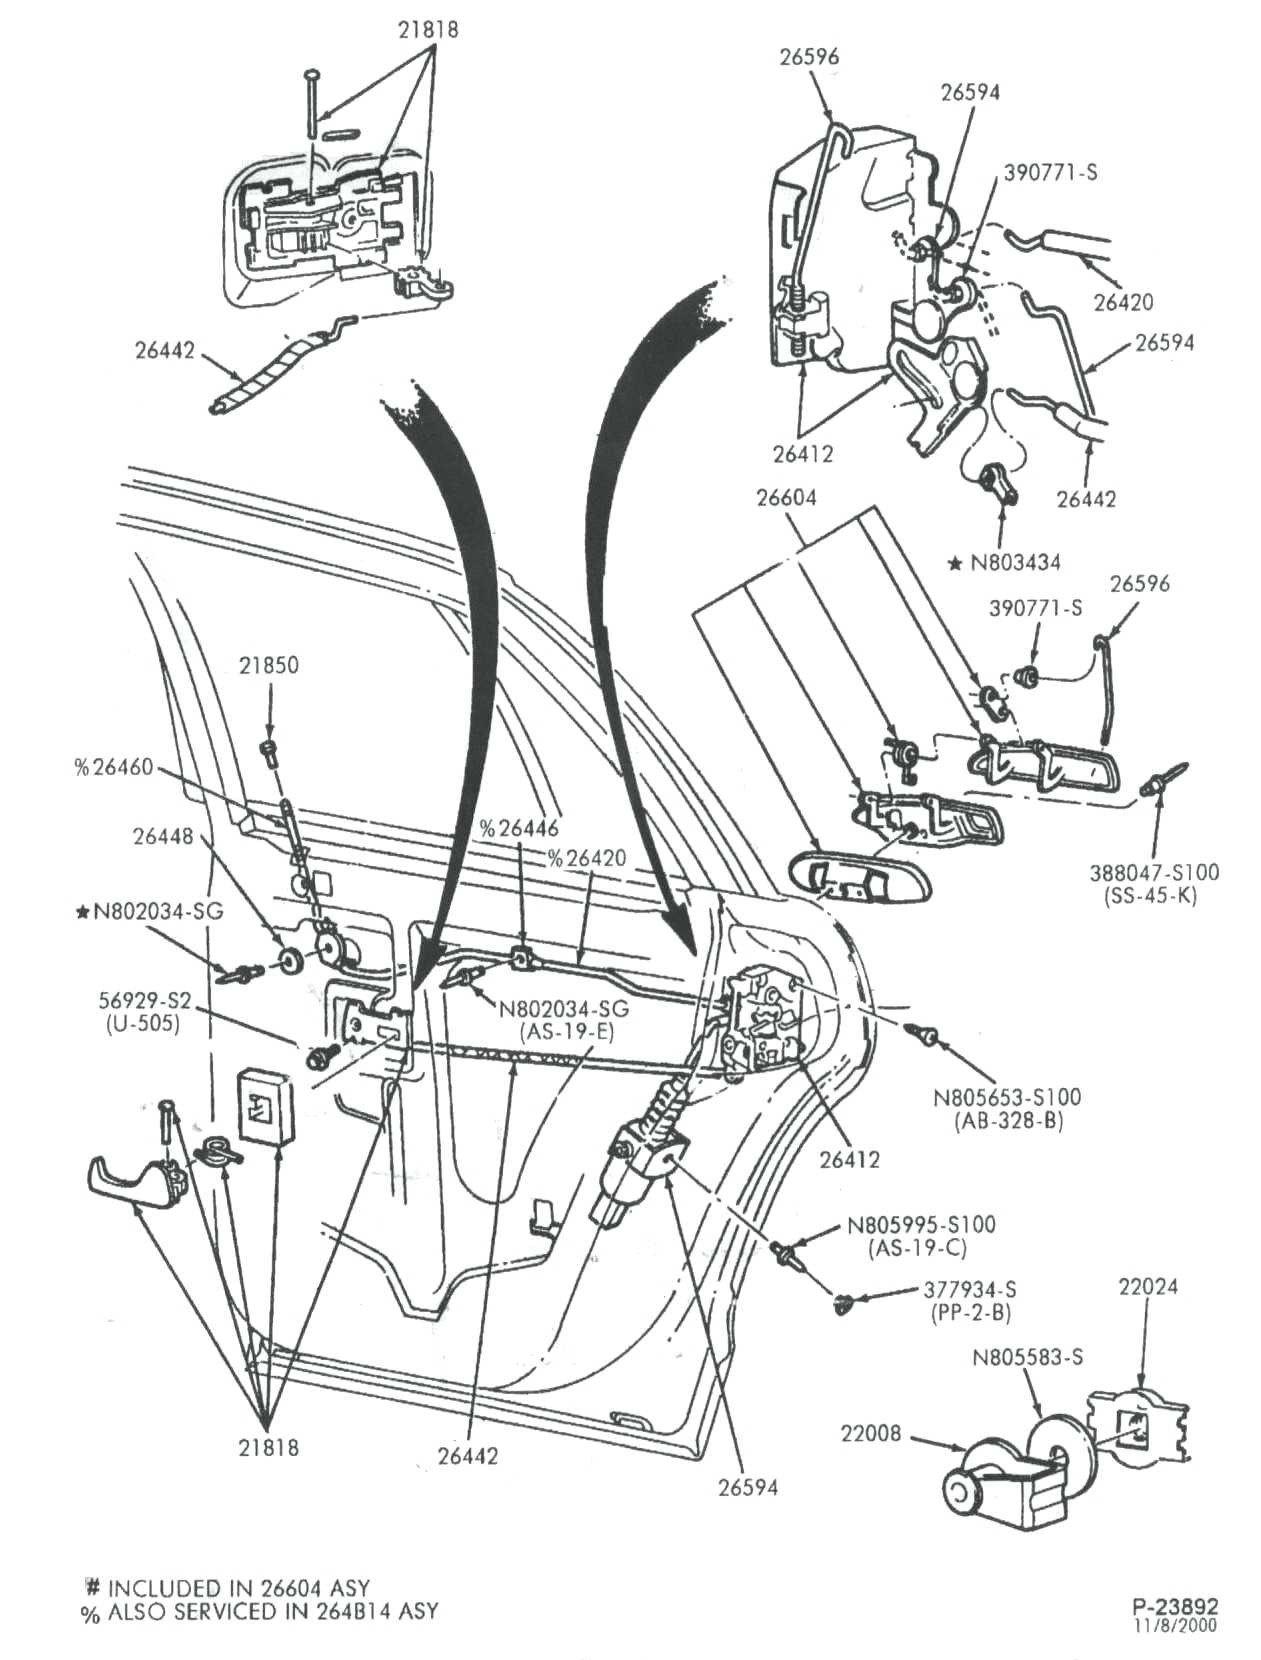 Car Interior Parts Diagram Car Diagram 24 Tremendous Car Undercarriage Parts Diagram Car Of Car Interior Parts Diagram